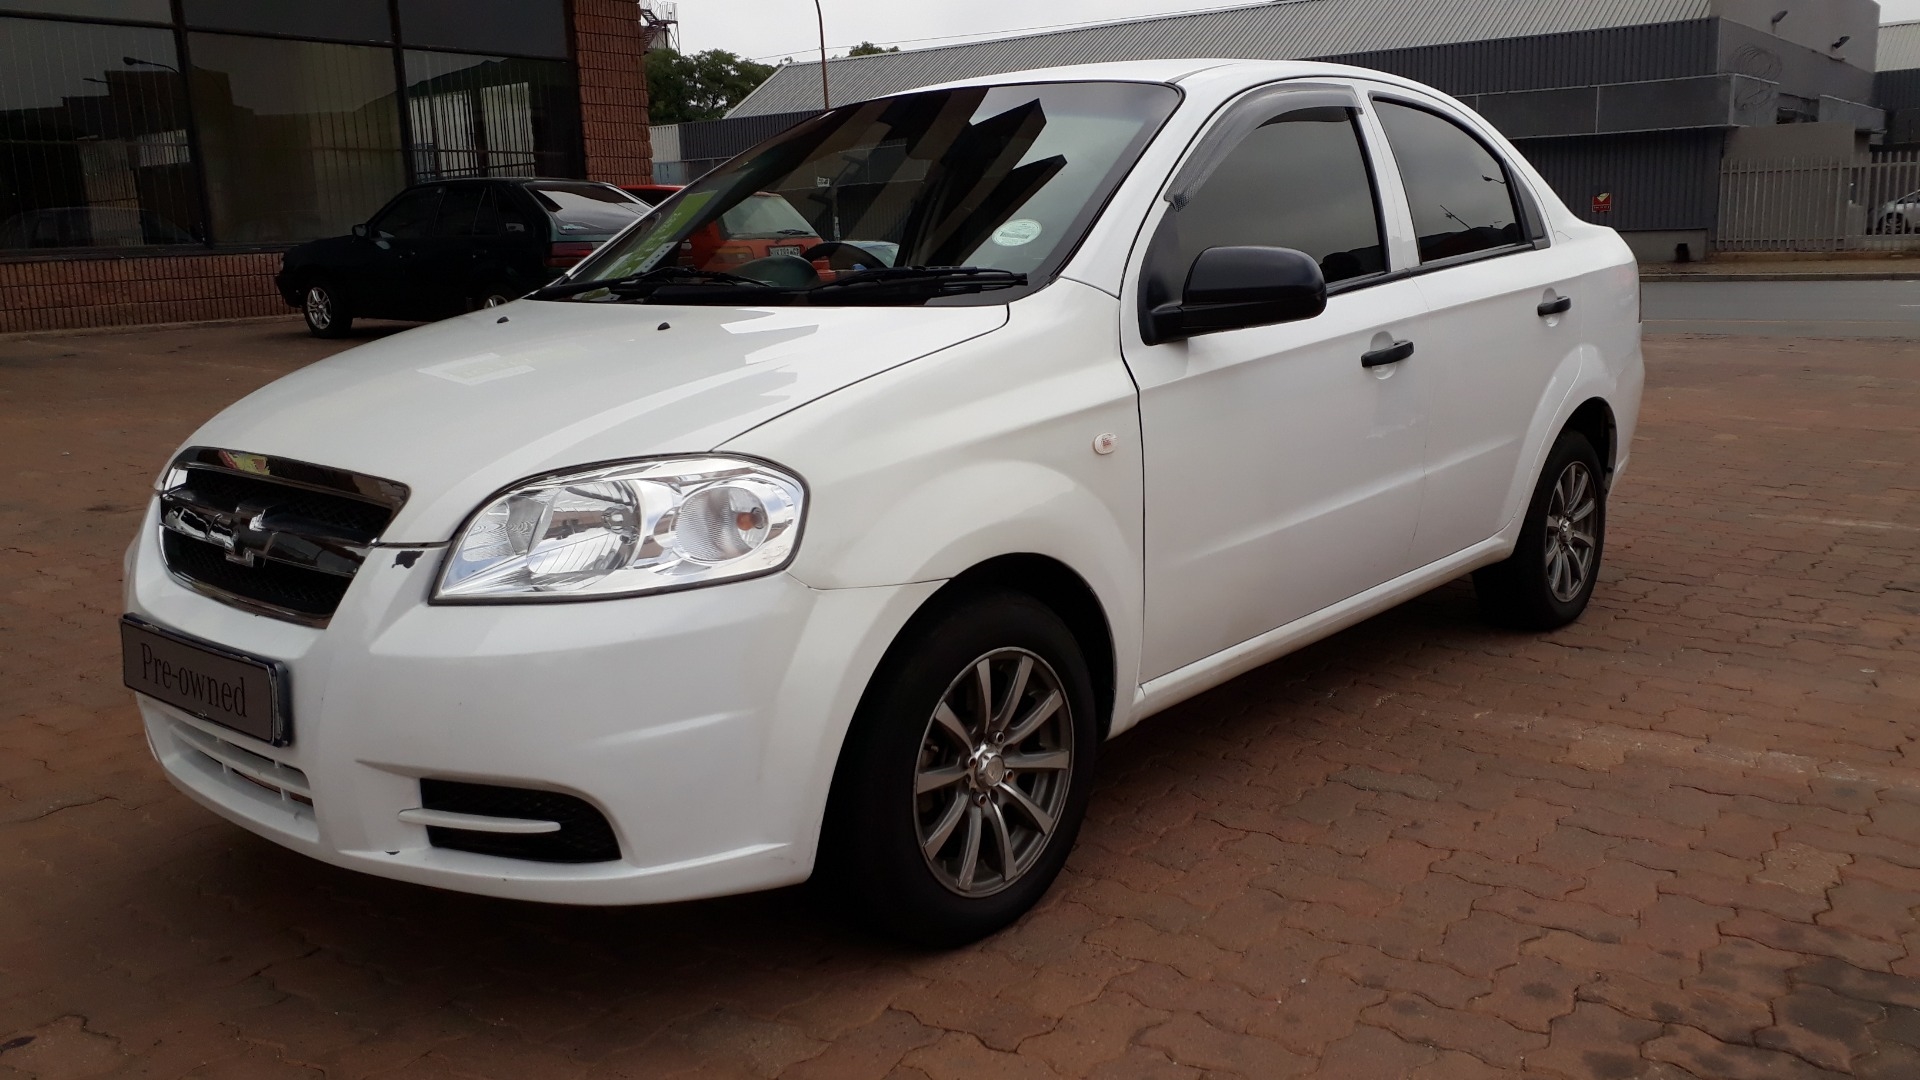 Chevrolet Aveo 1.6 LS sedan for sale in Gauteng Auto Mart